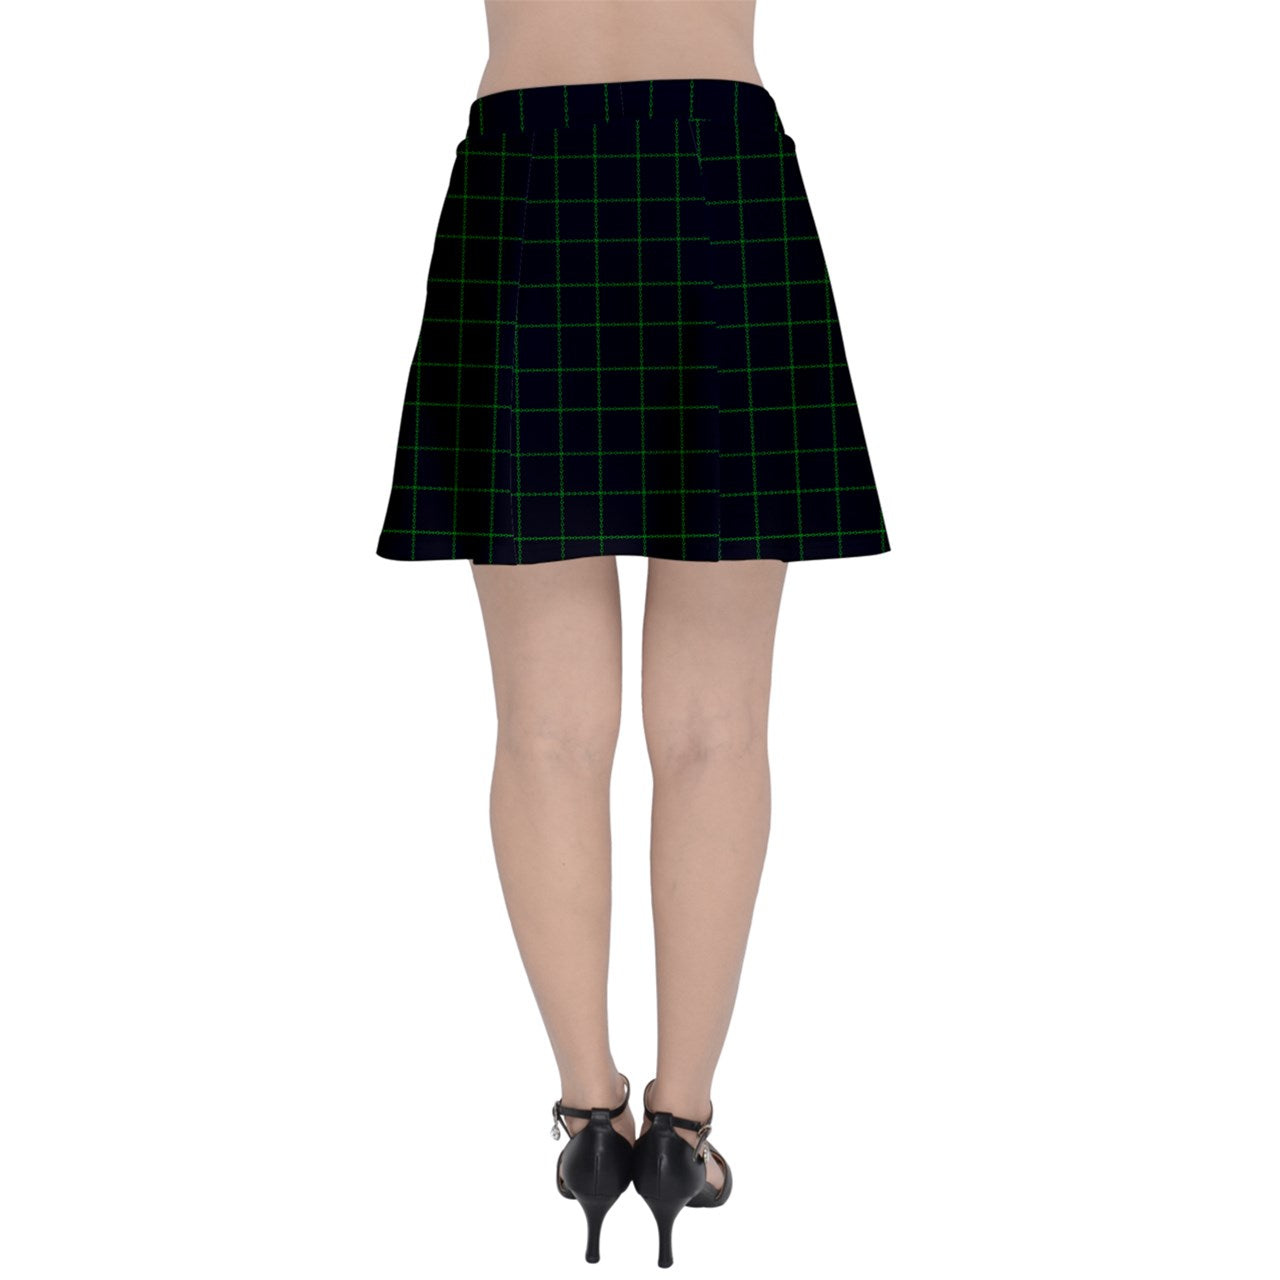 Angsty Dream Babe Panel Skirt